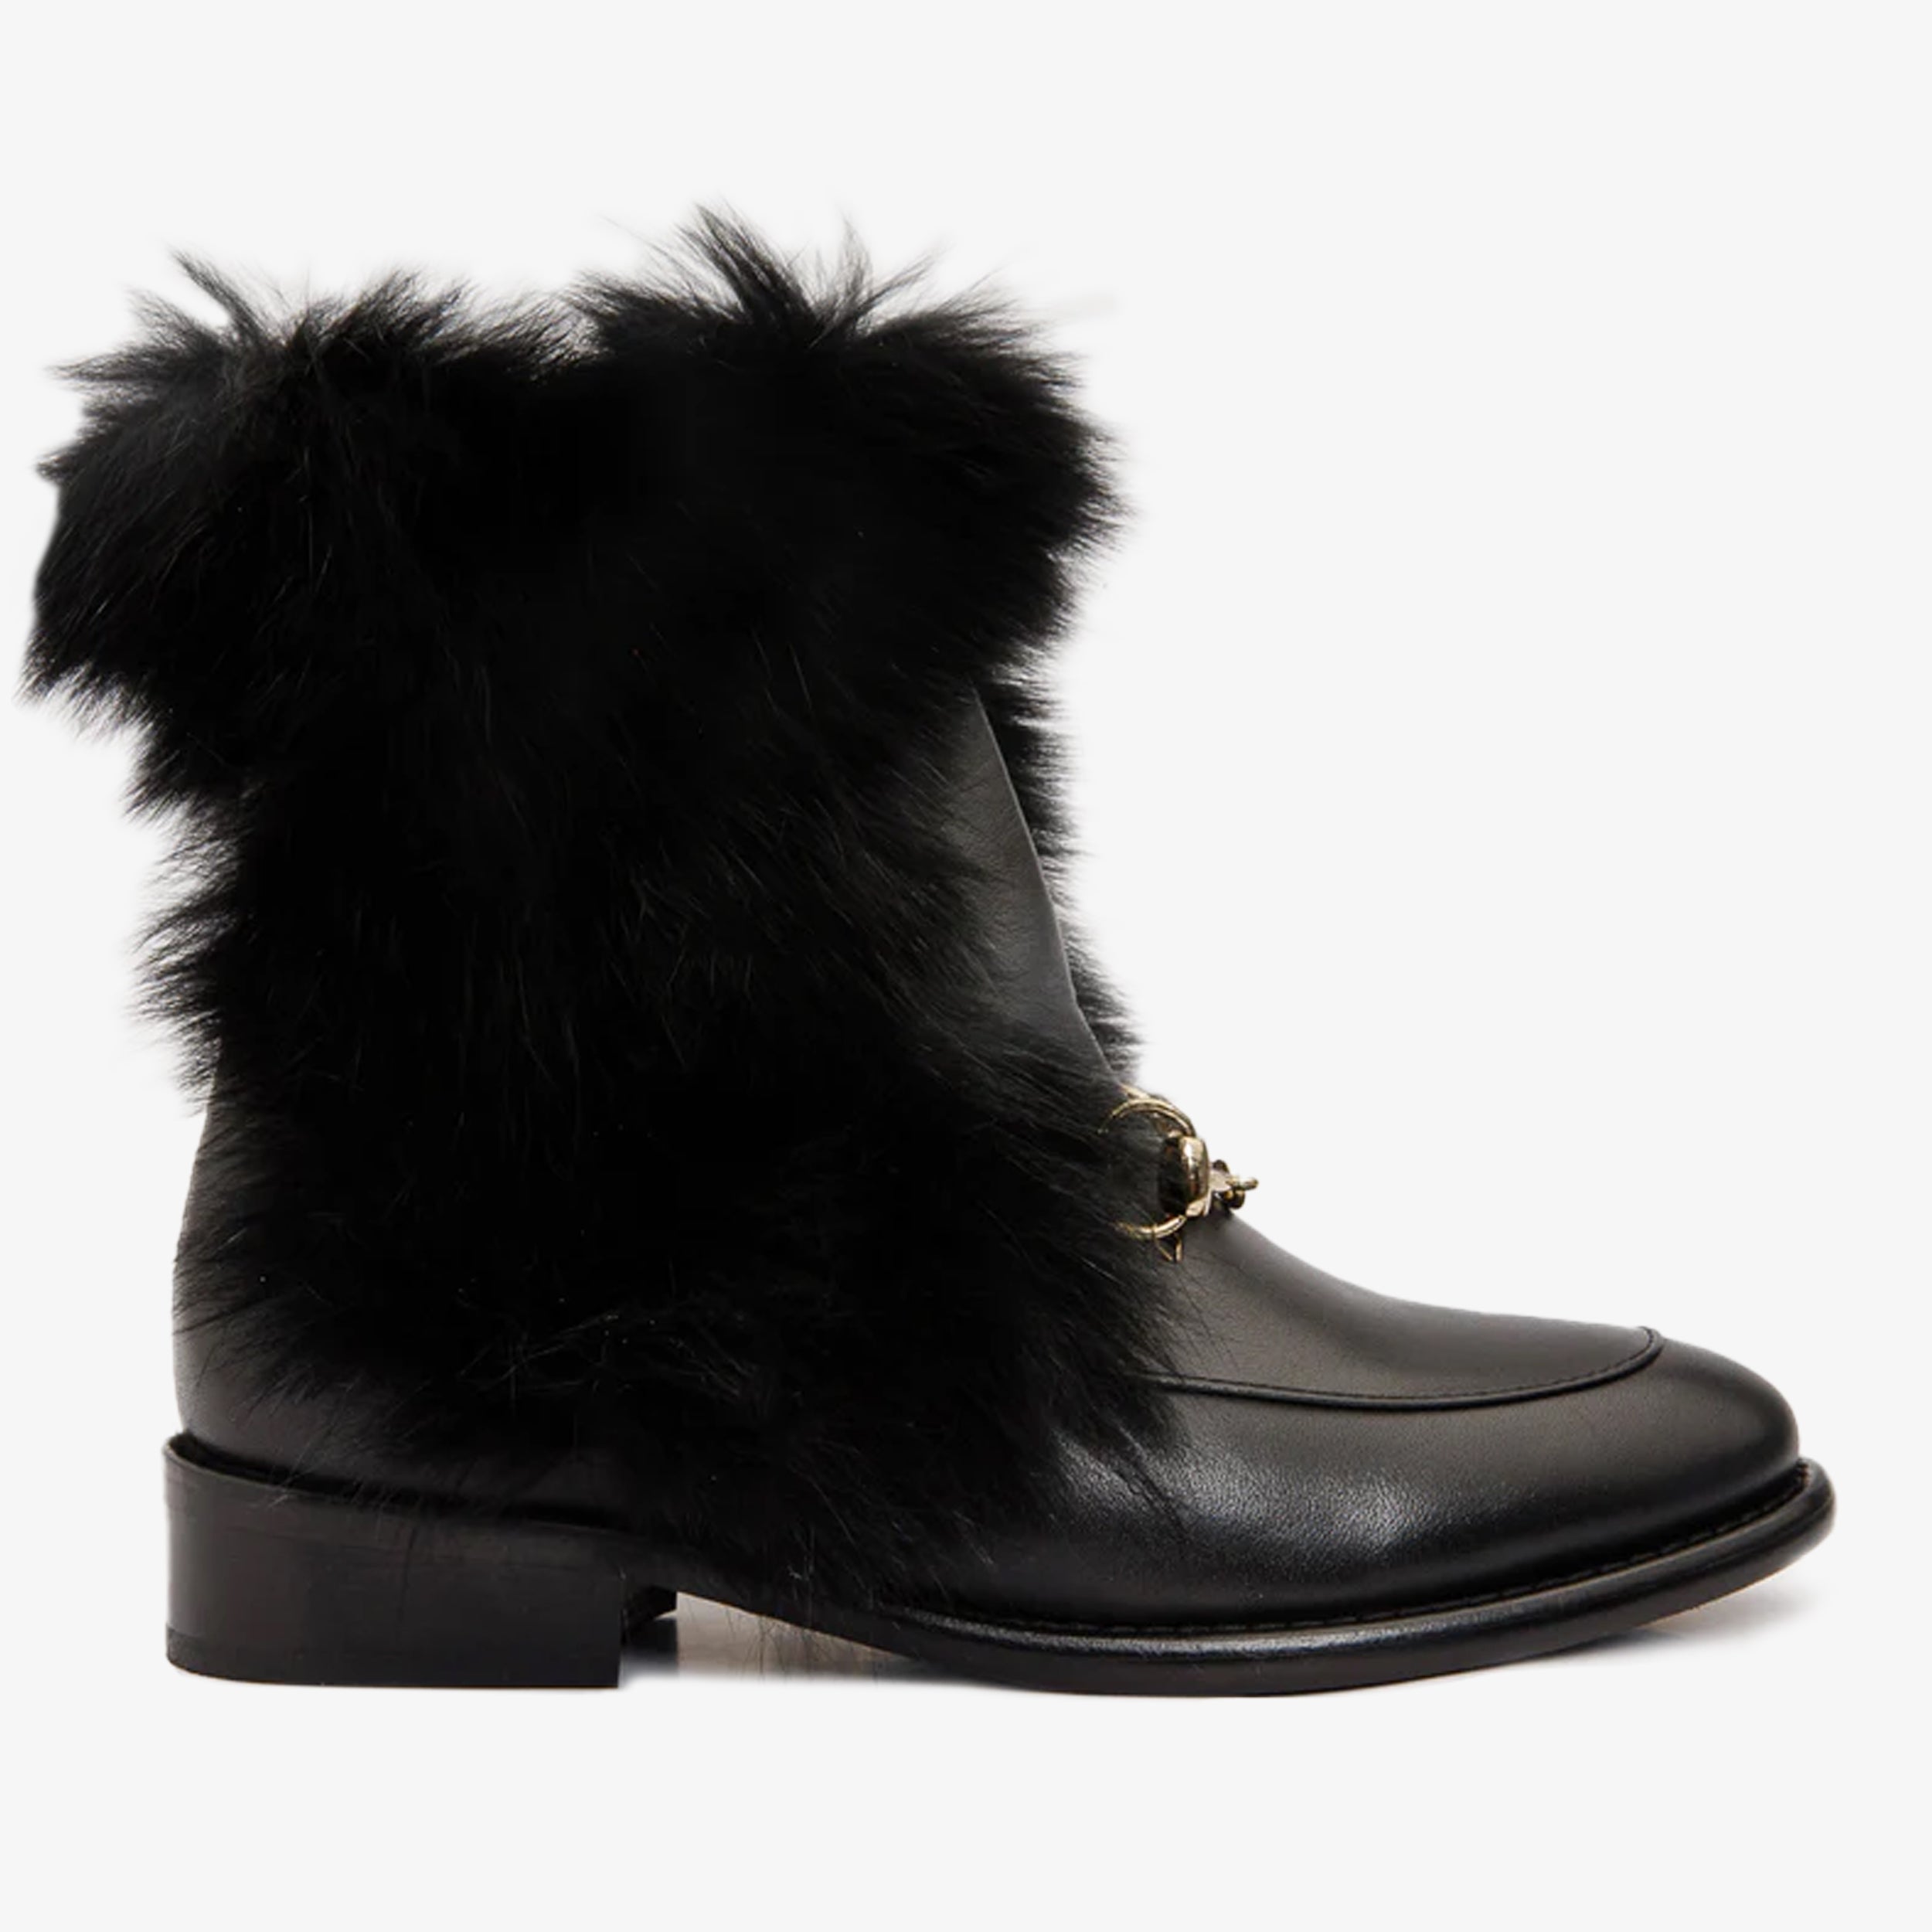 The Izmir Black Leather Natural Fur Mid Calf Women Boot